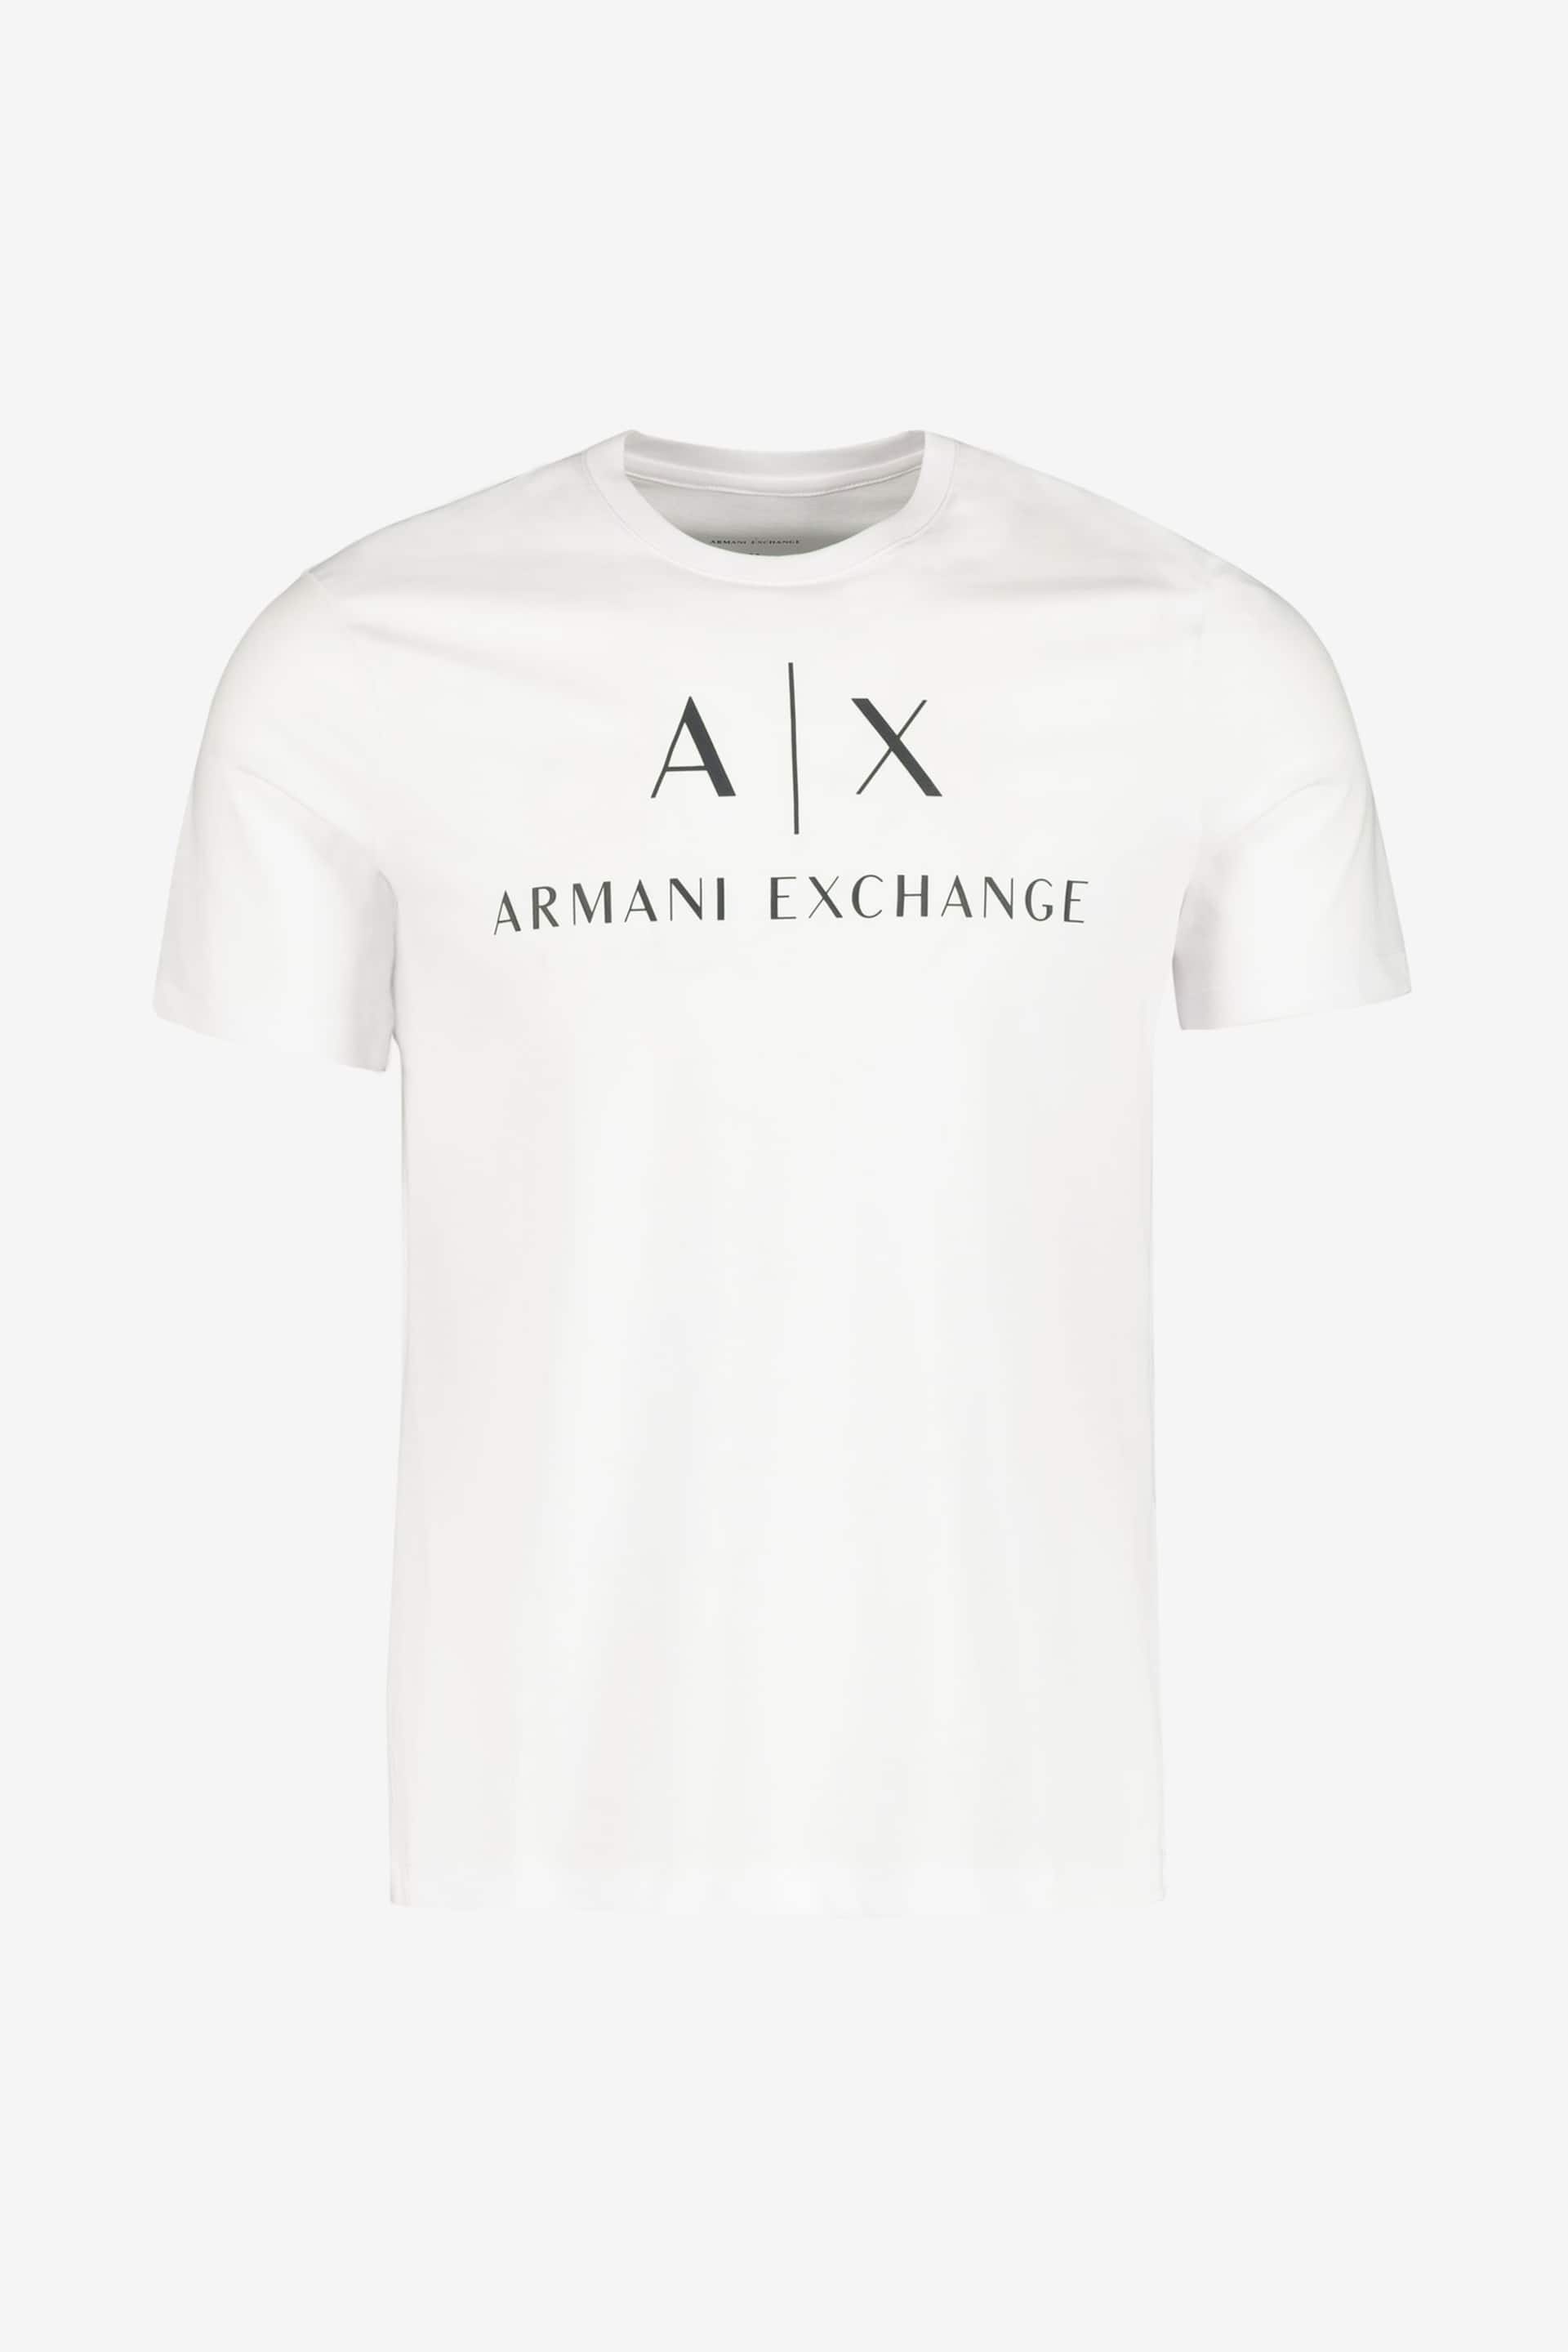 Armani Exchange Logo T-Shirt - Image 5 of 5